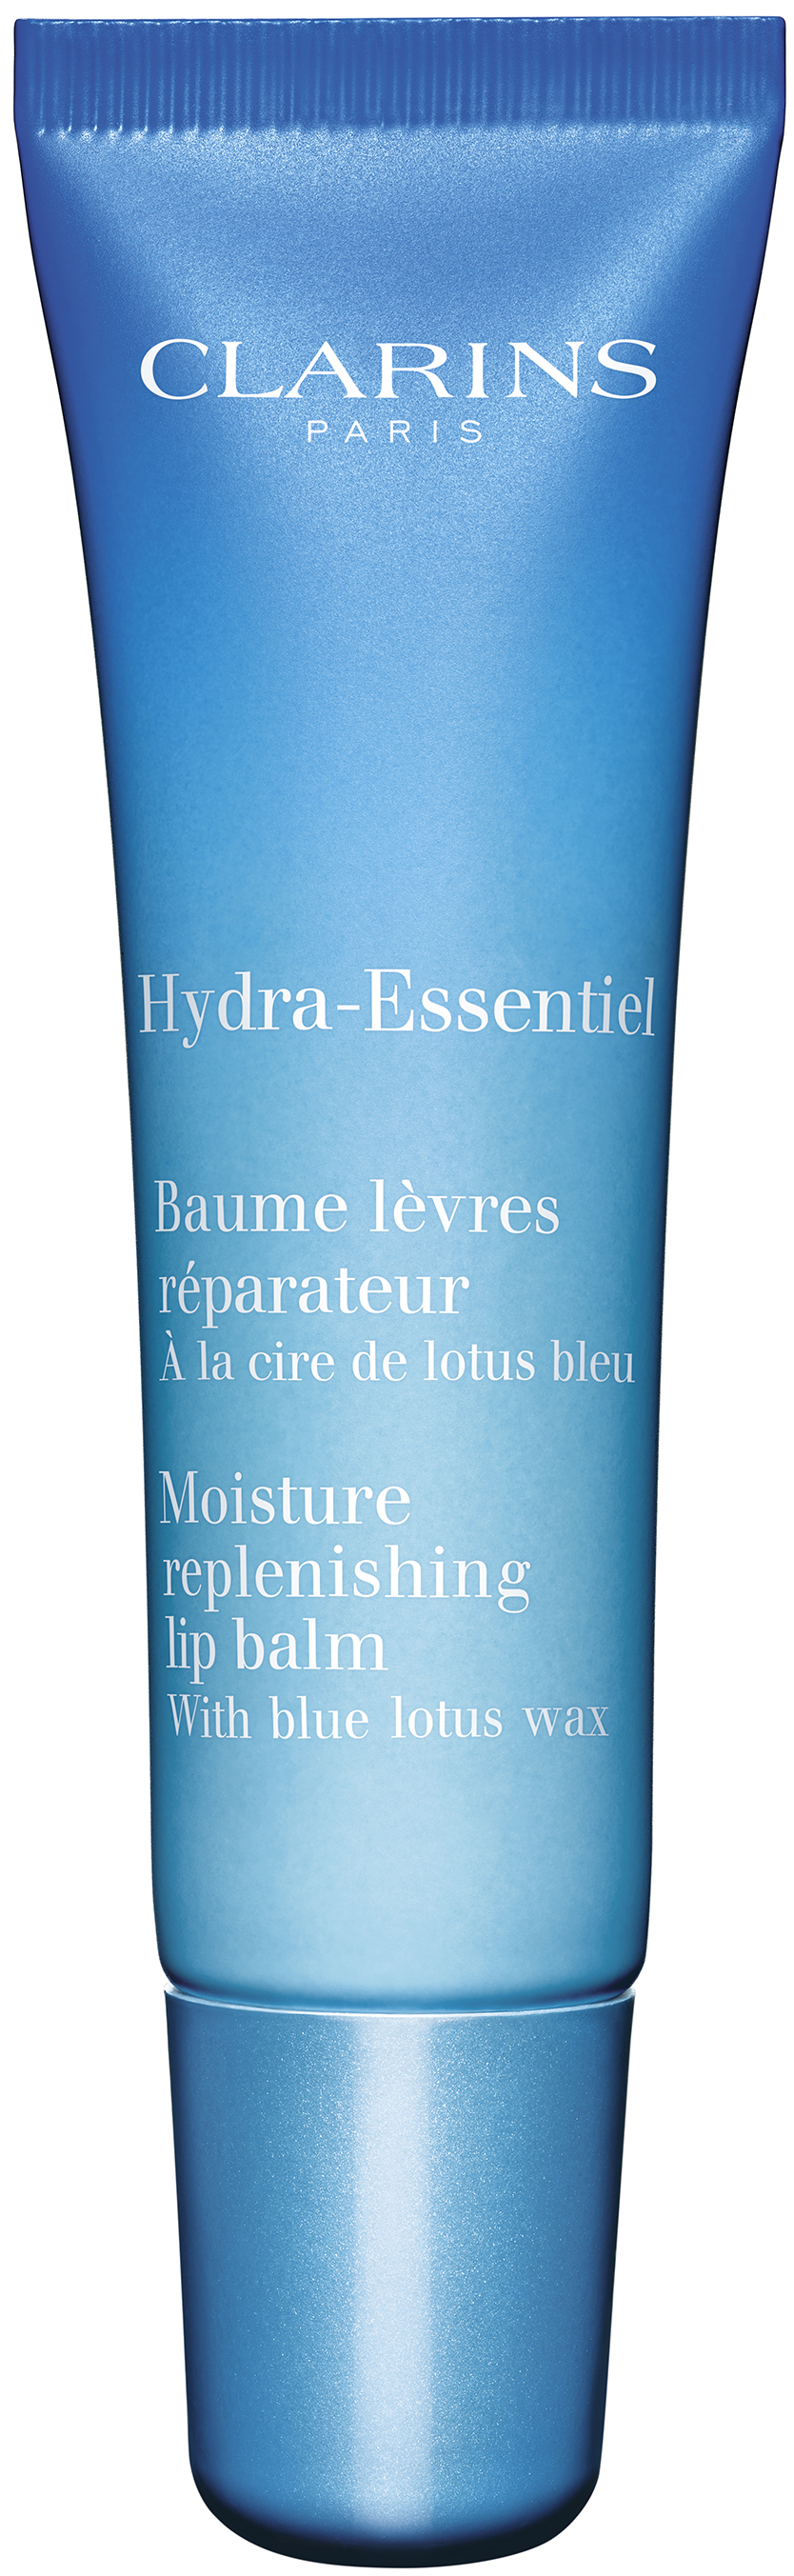 clarins hydra essential moisture replenishing lip balm